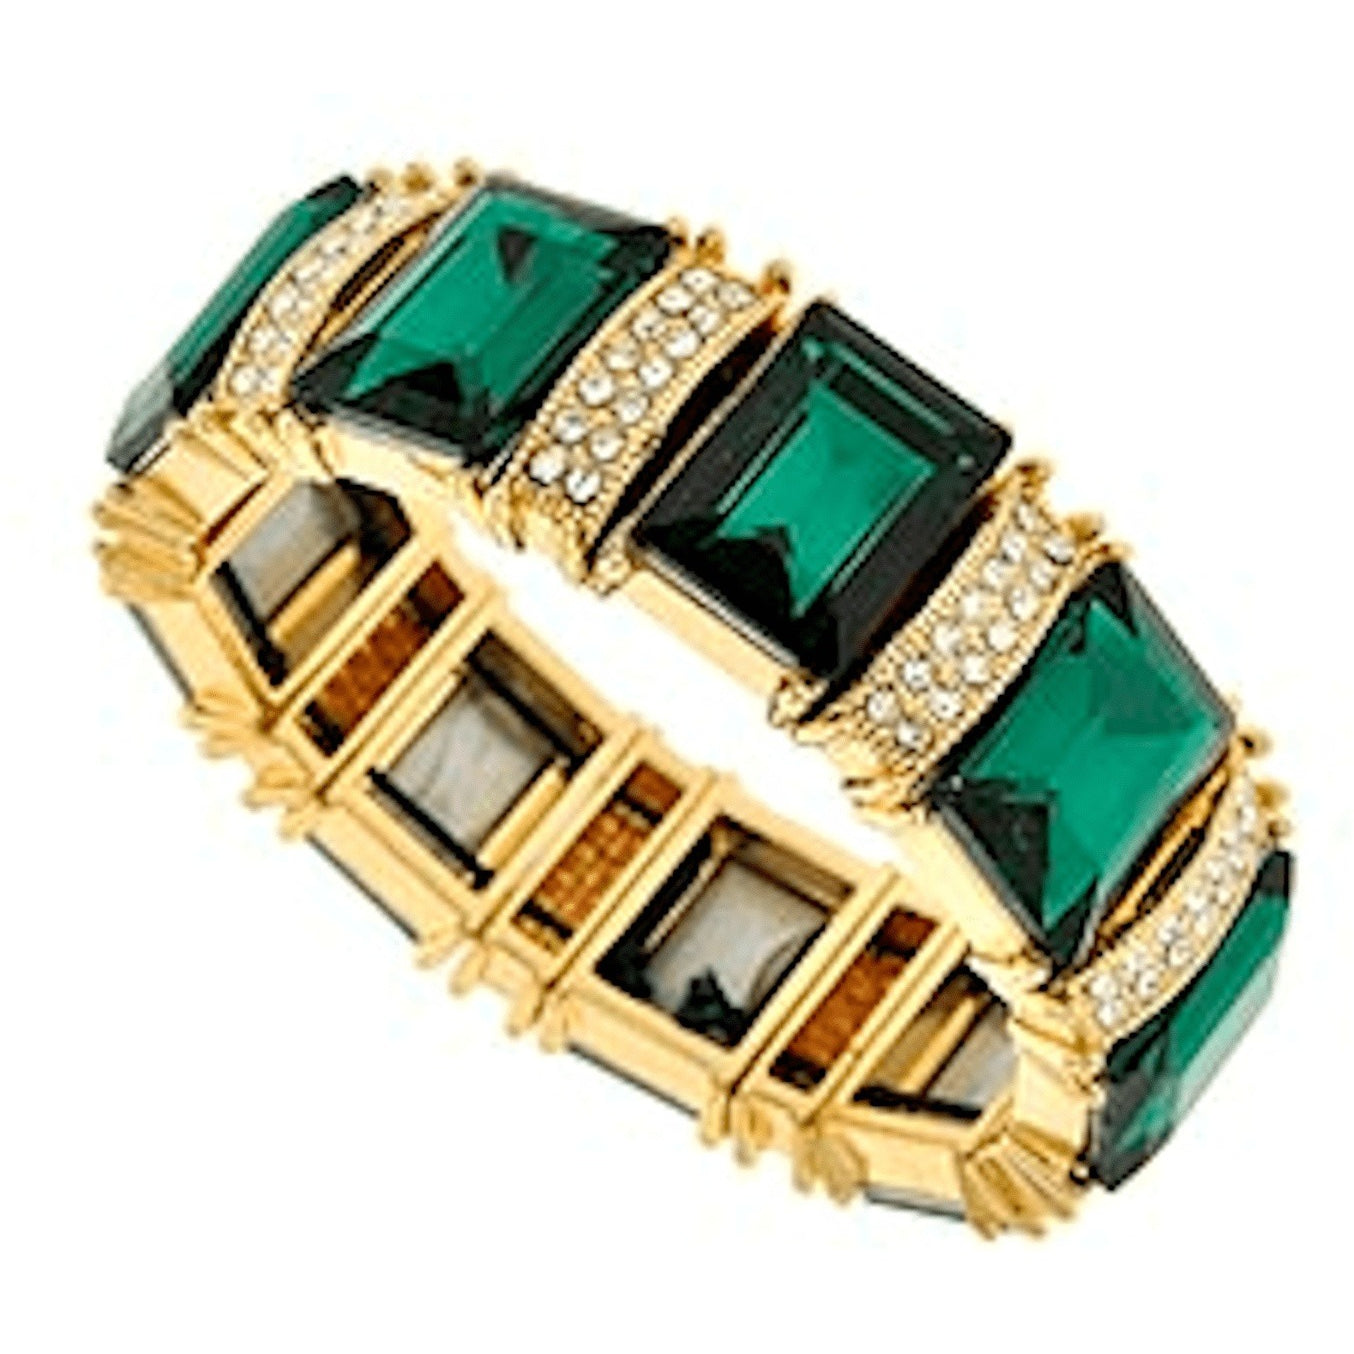 Emerald and Gold Rhinestone Stretch Bracelet Jewlery